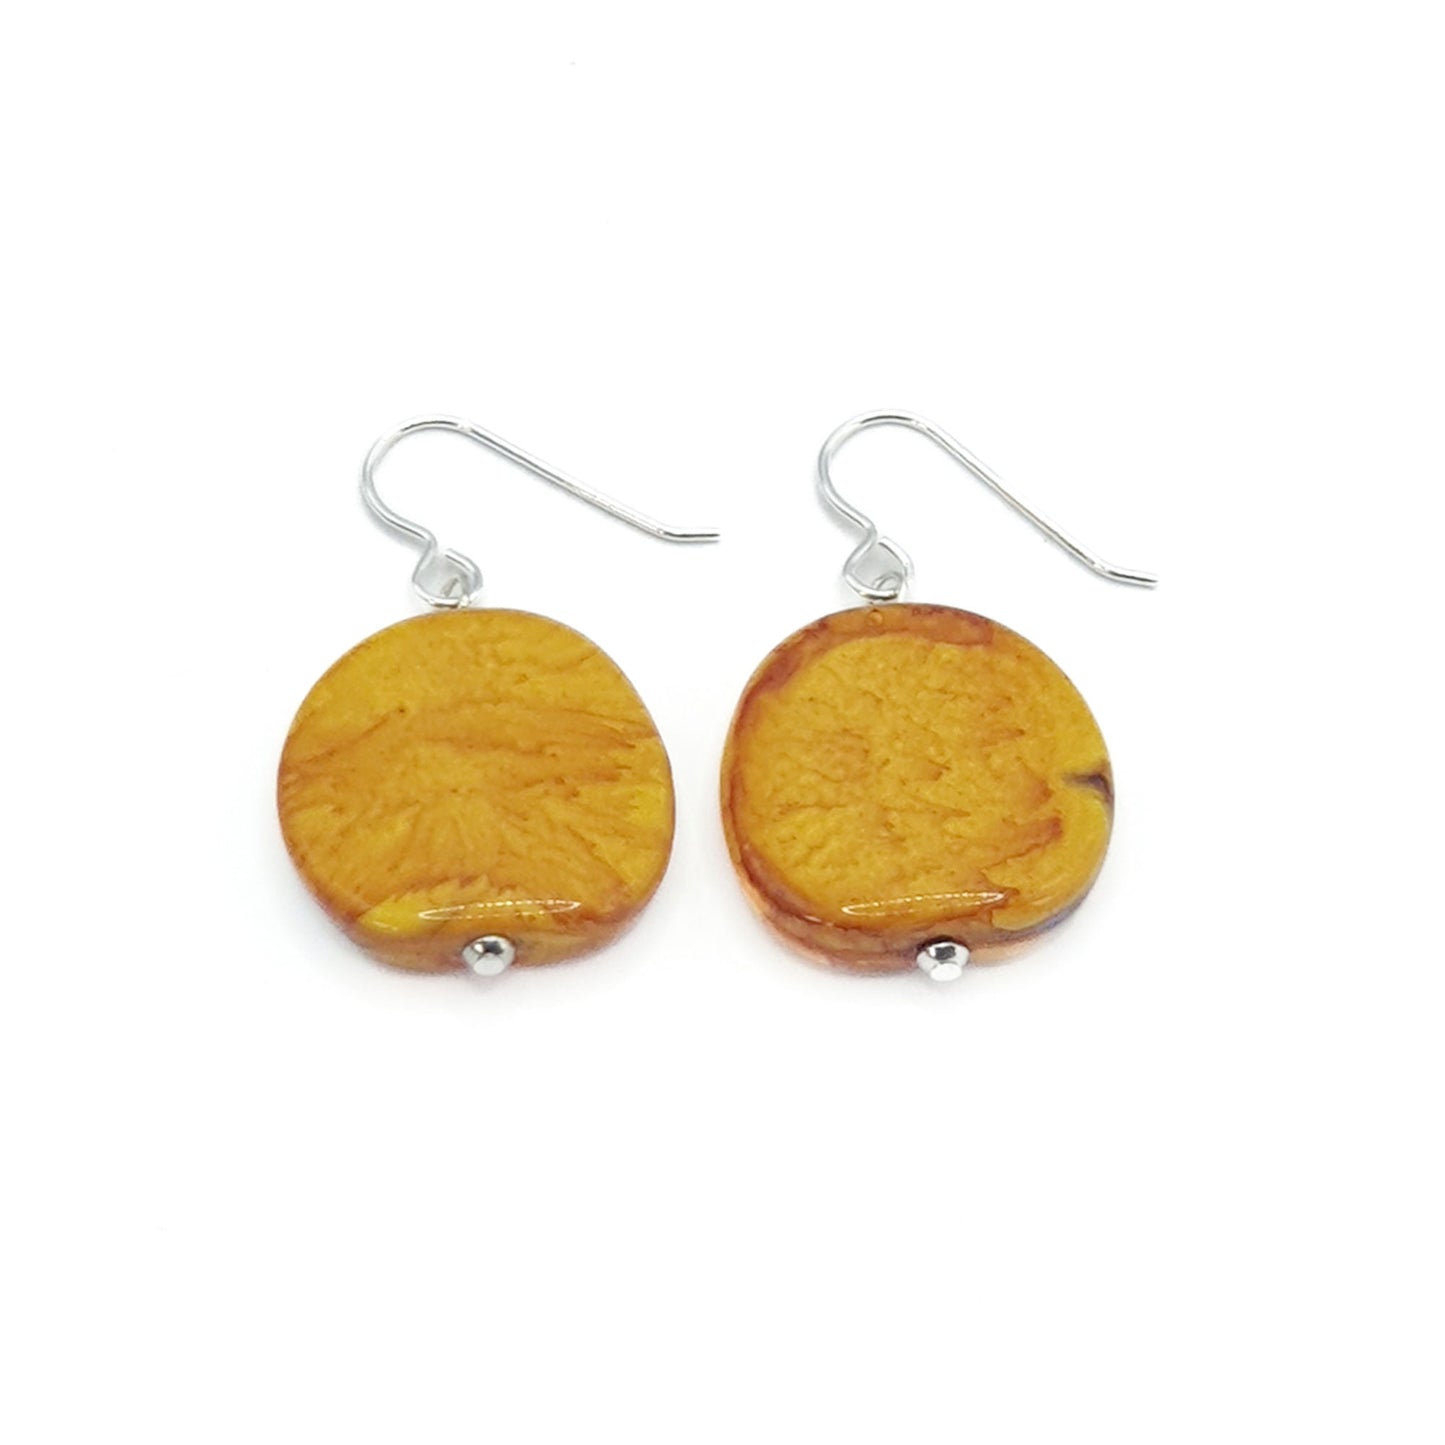 Resin pebble earrings in mustard yellow